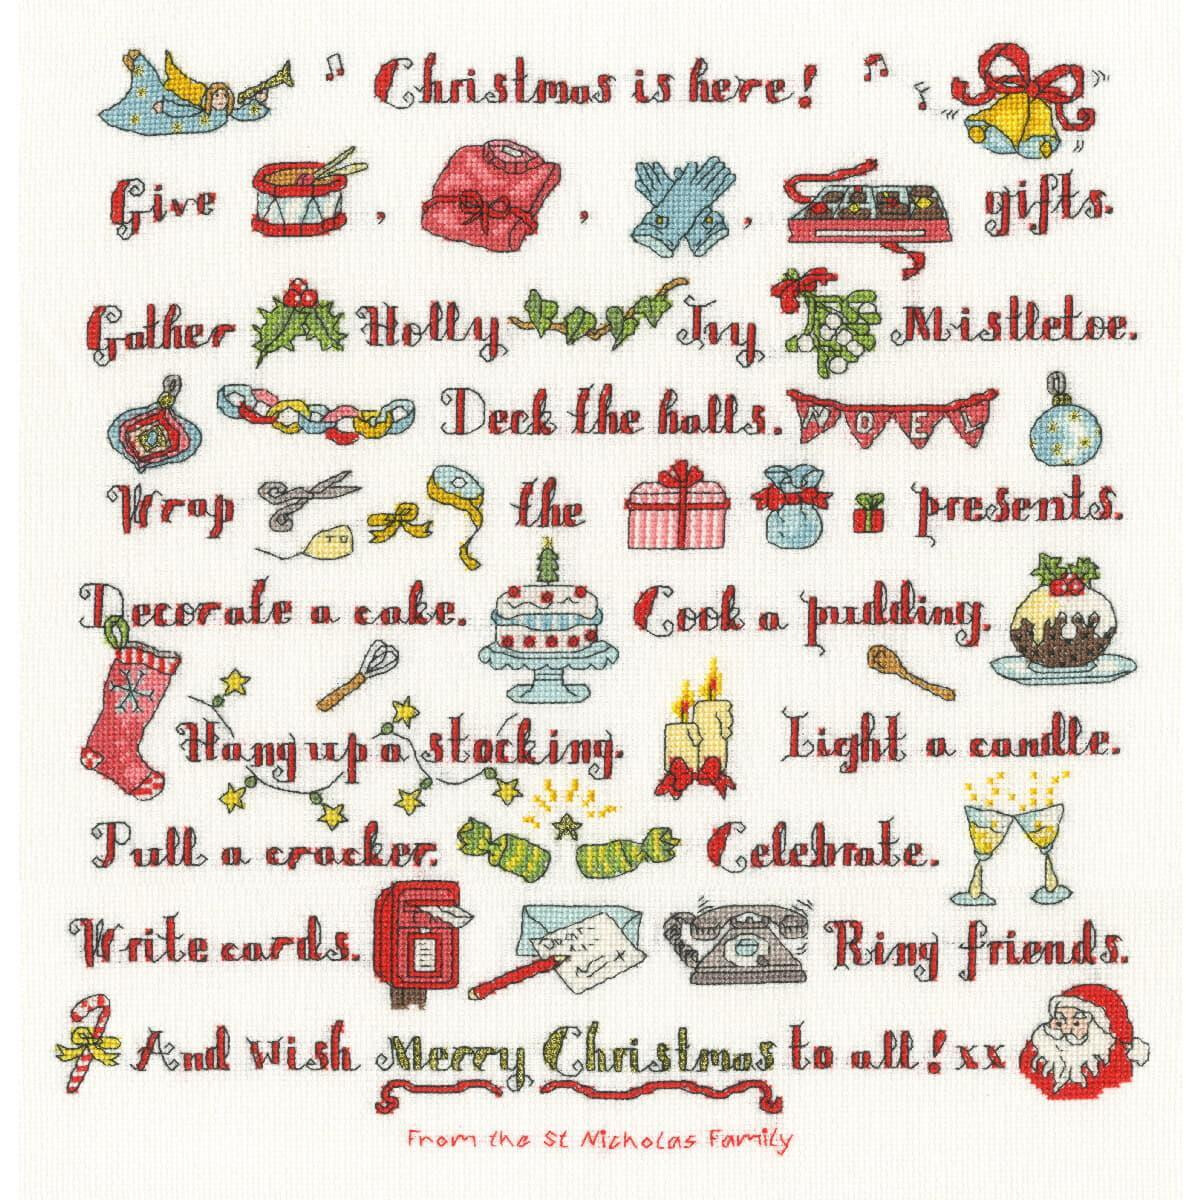 A festive Christmas-themed illustration listing various...